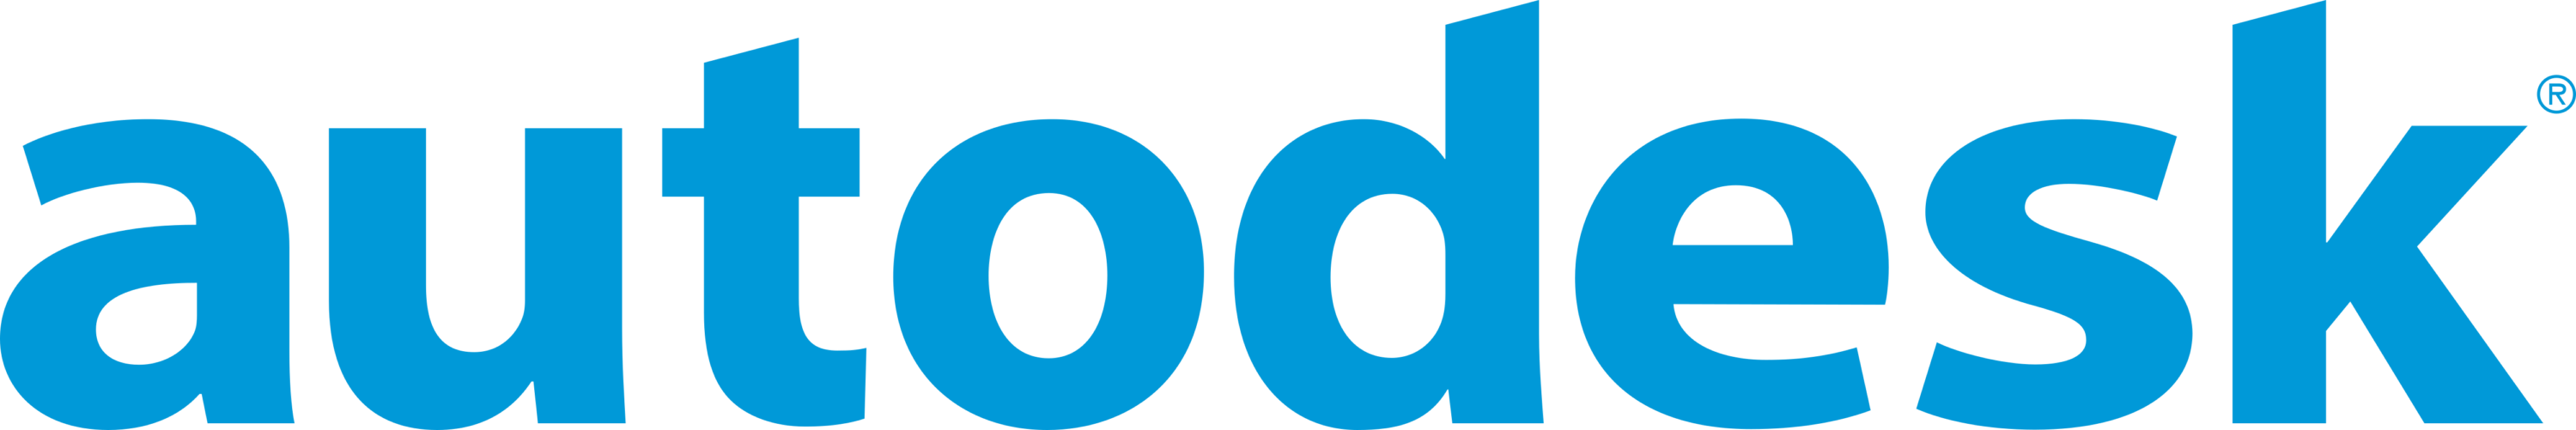 Autodesk Logo 2000